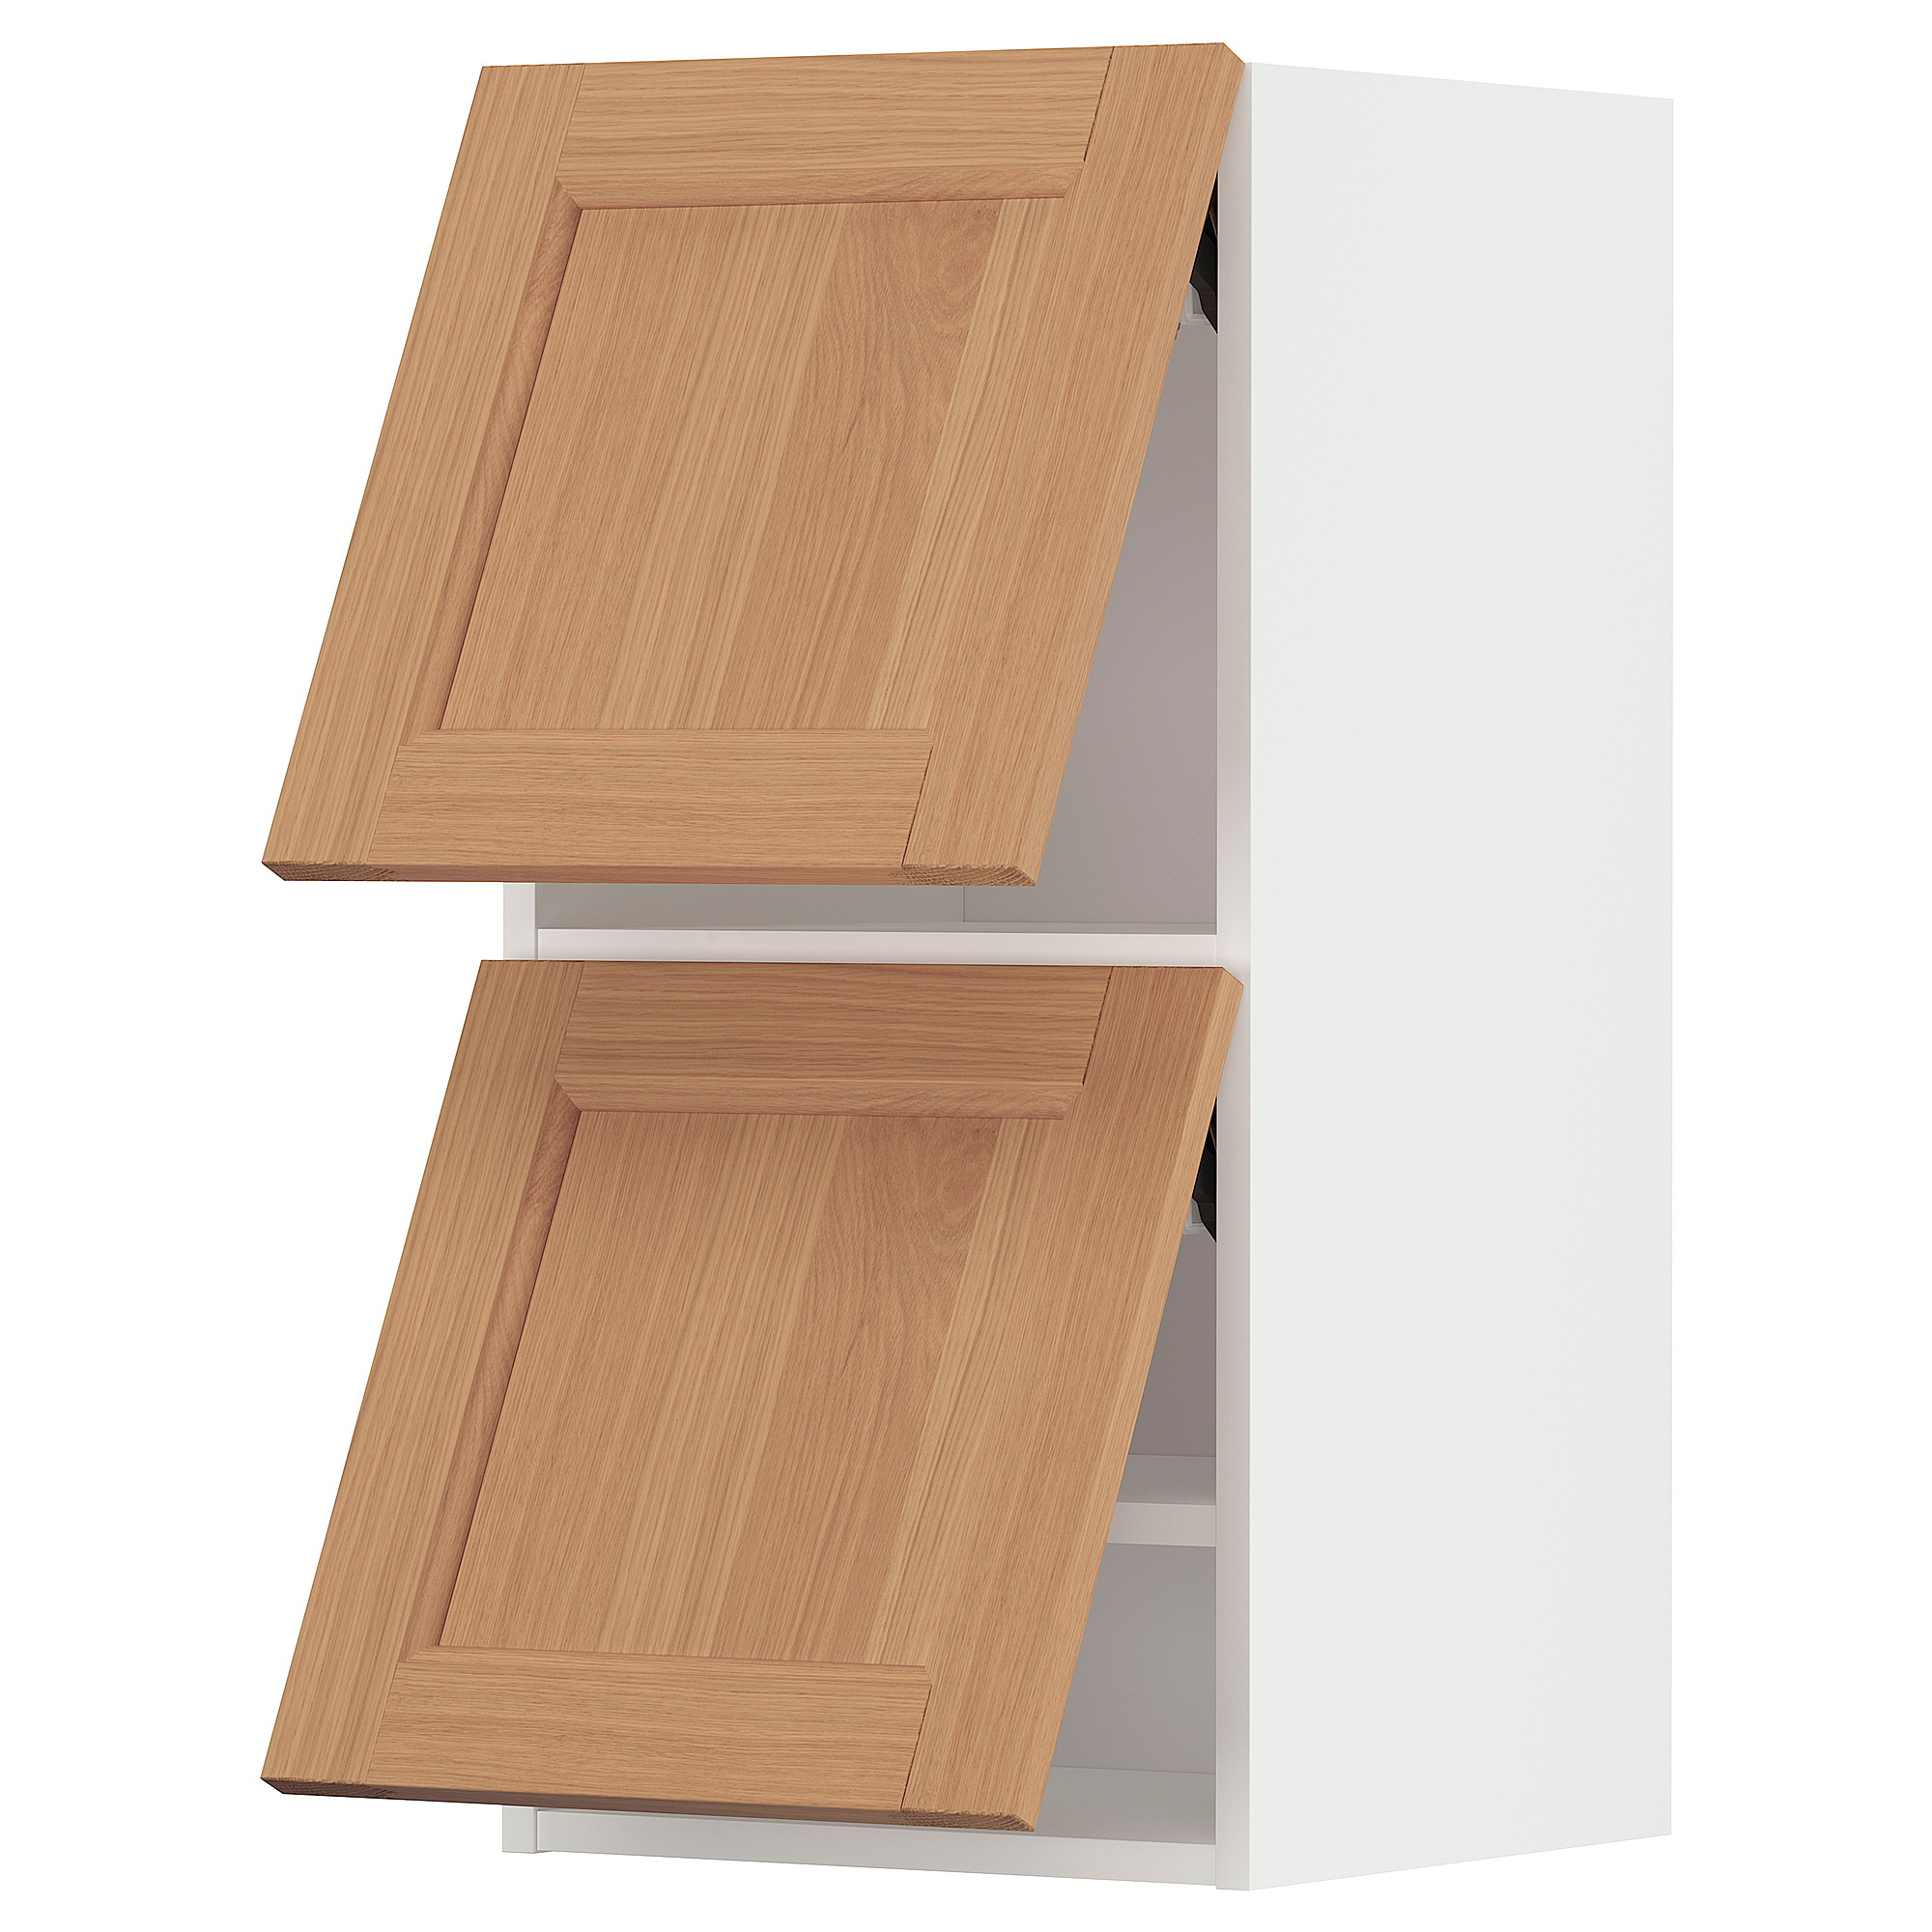 METOD wall cabinet horizontal w 2 doors